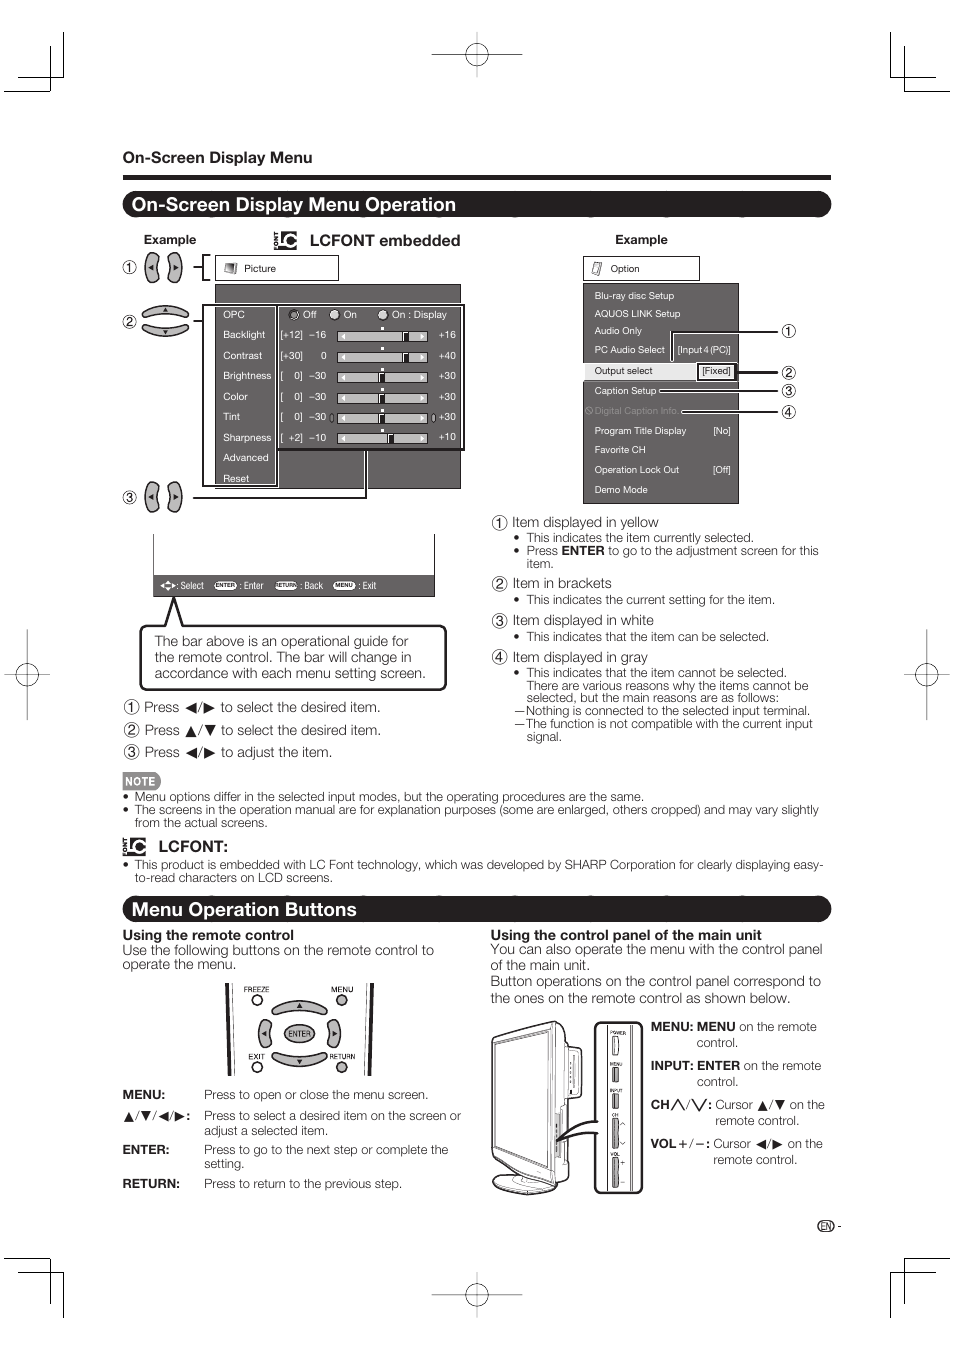 On-screen display menu operation, Menu operation buttons, On-screen display menu | Lcfont, Lcfont embedded | Sharp Aquos LC 46BD80UN User Manual | Page 33 / 65